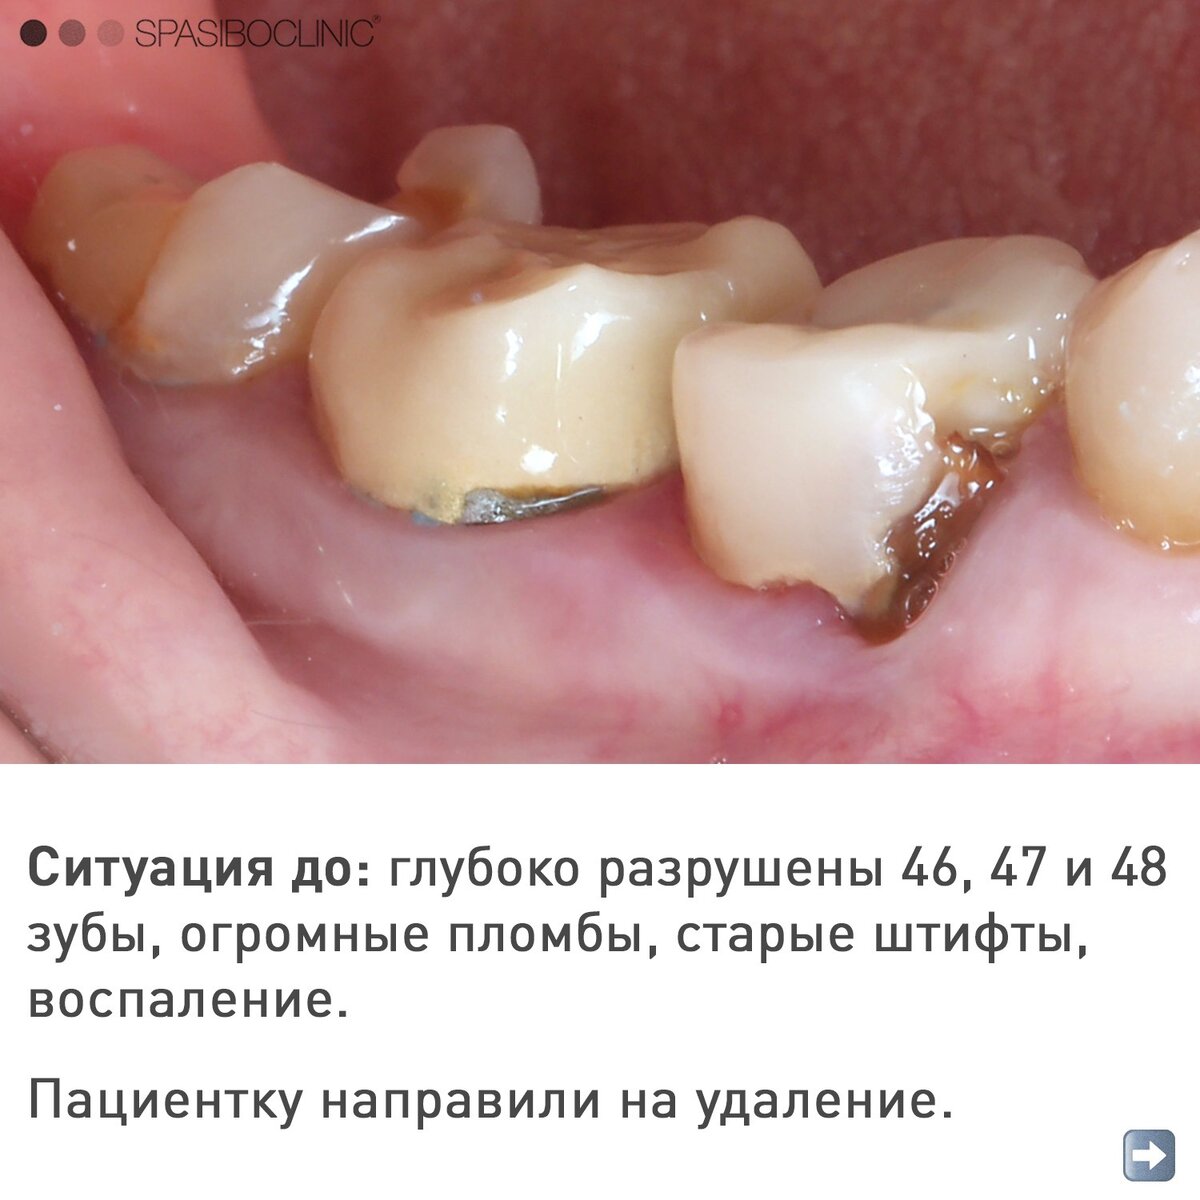 Кариес зуба мудрости: лечить или удалять